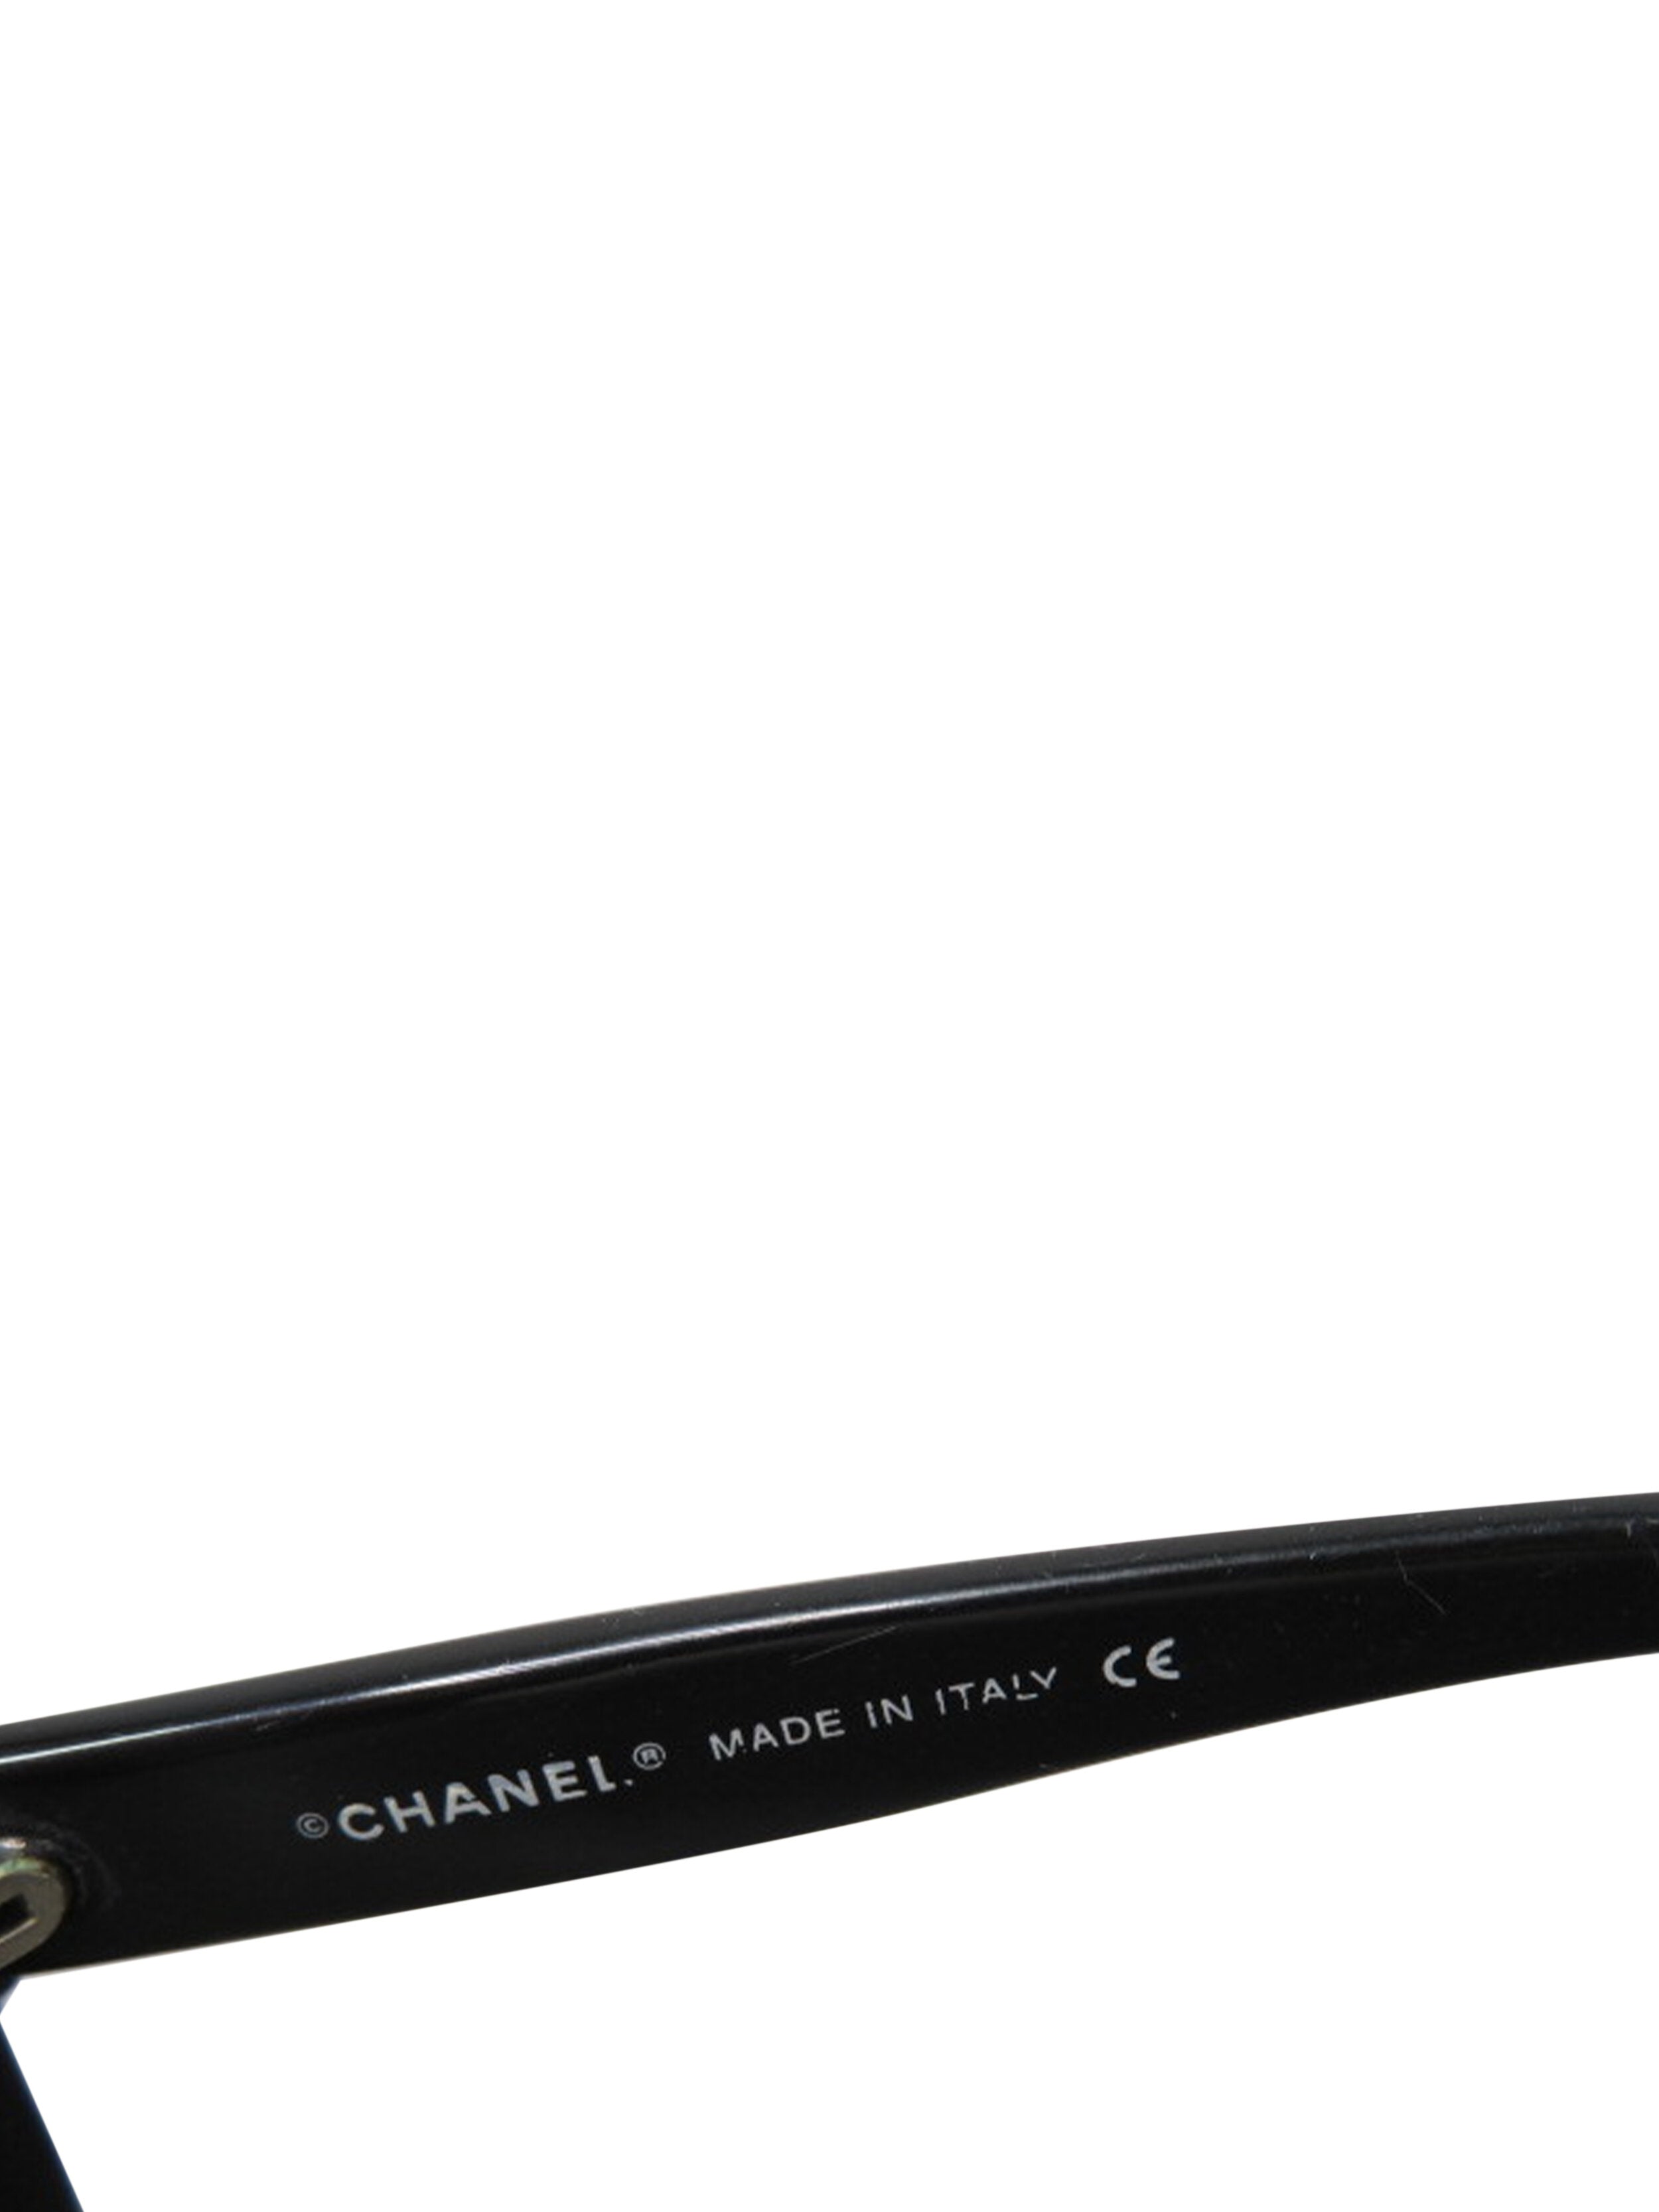 Chanel Sunglasses Authentic Chanel Logo Oversized Sunglasses 